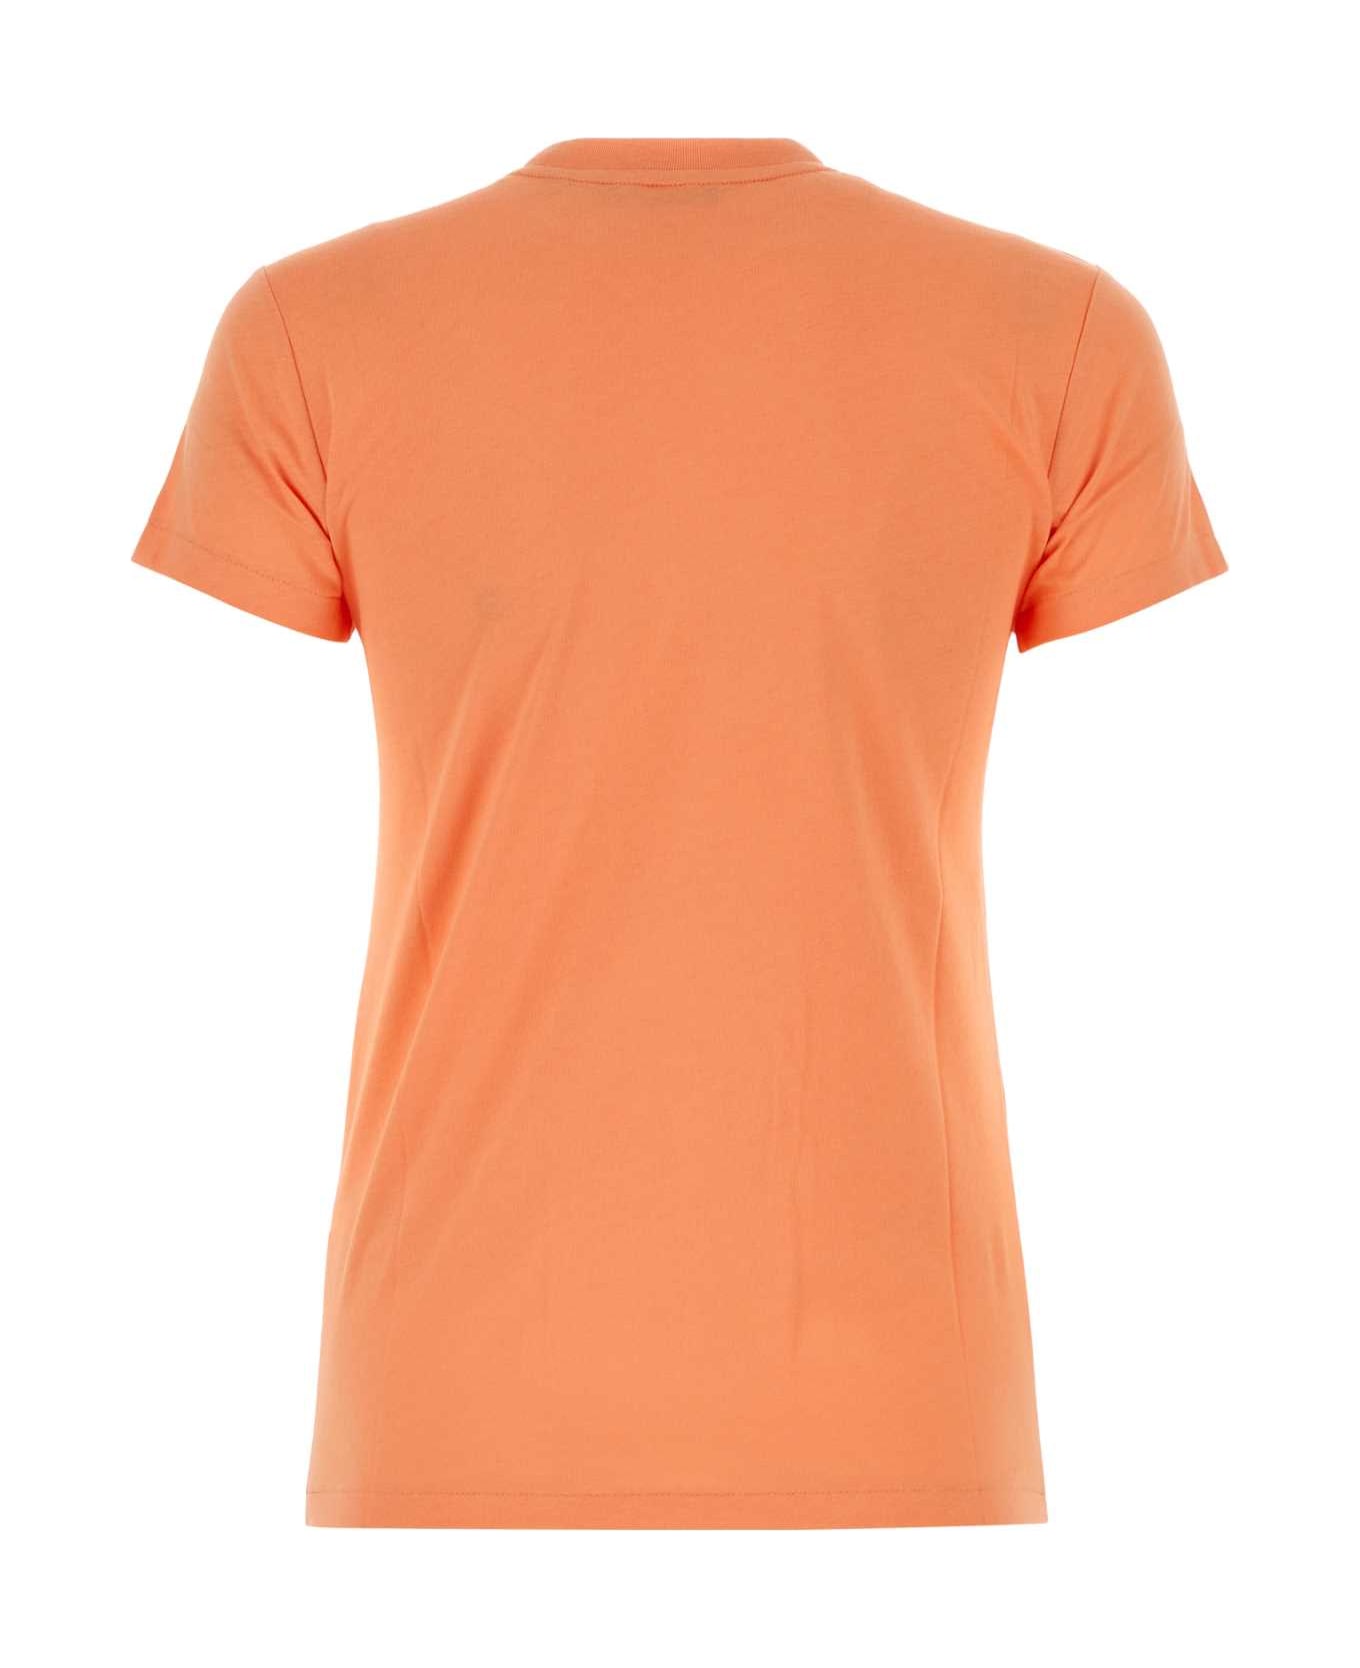 Polo Ralph Lauren Orange Cotton T-shirt - PEACHTREE Tシャツ